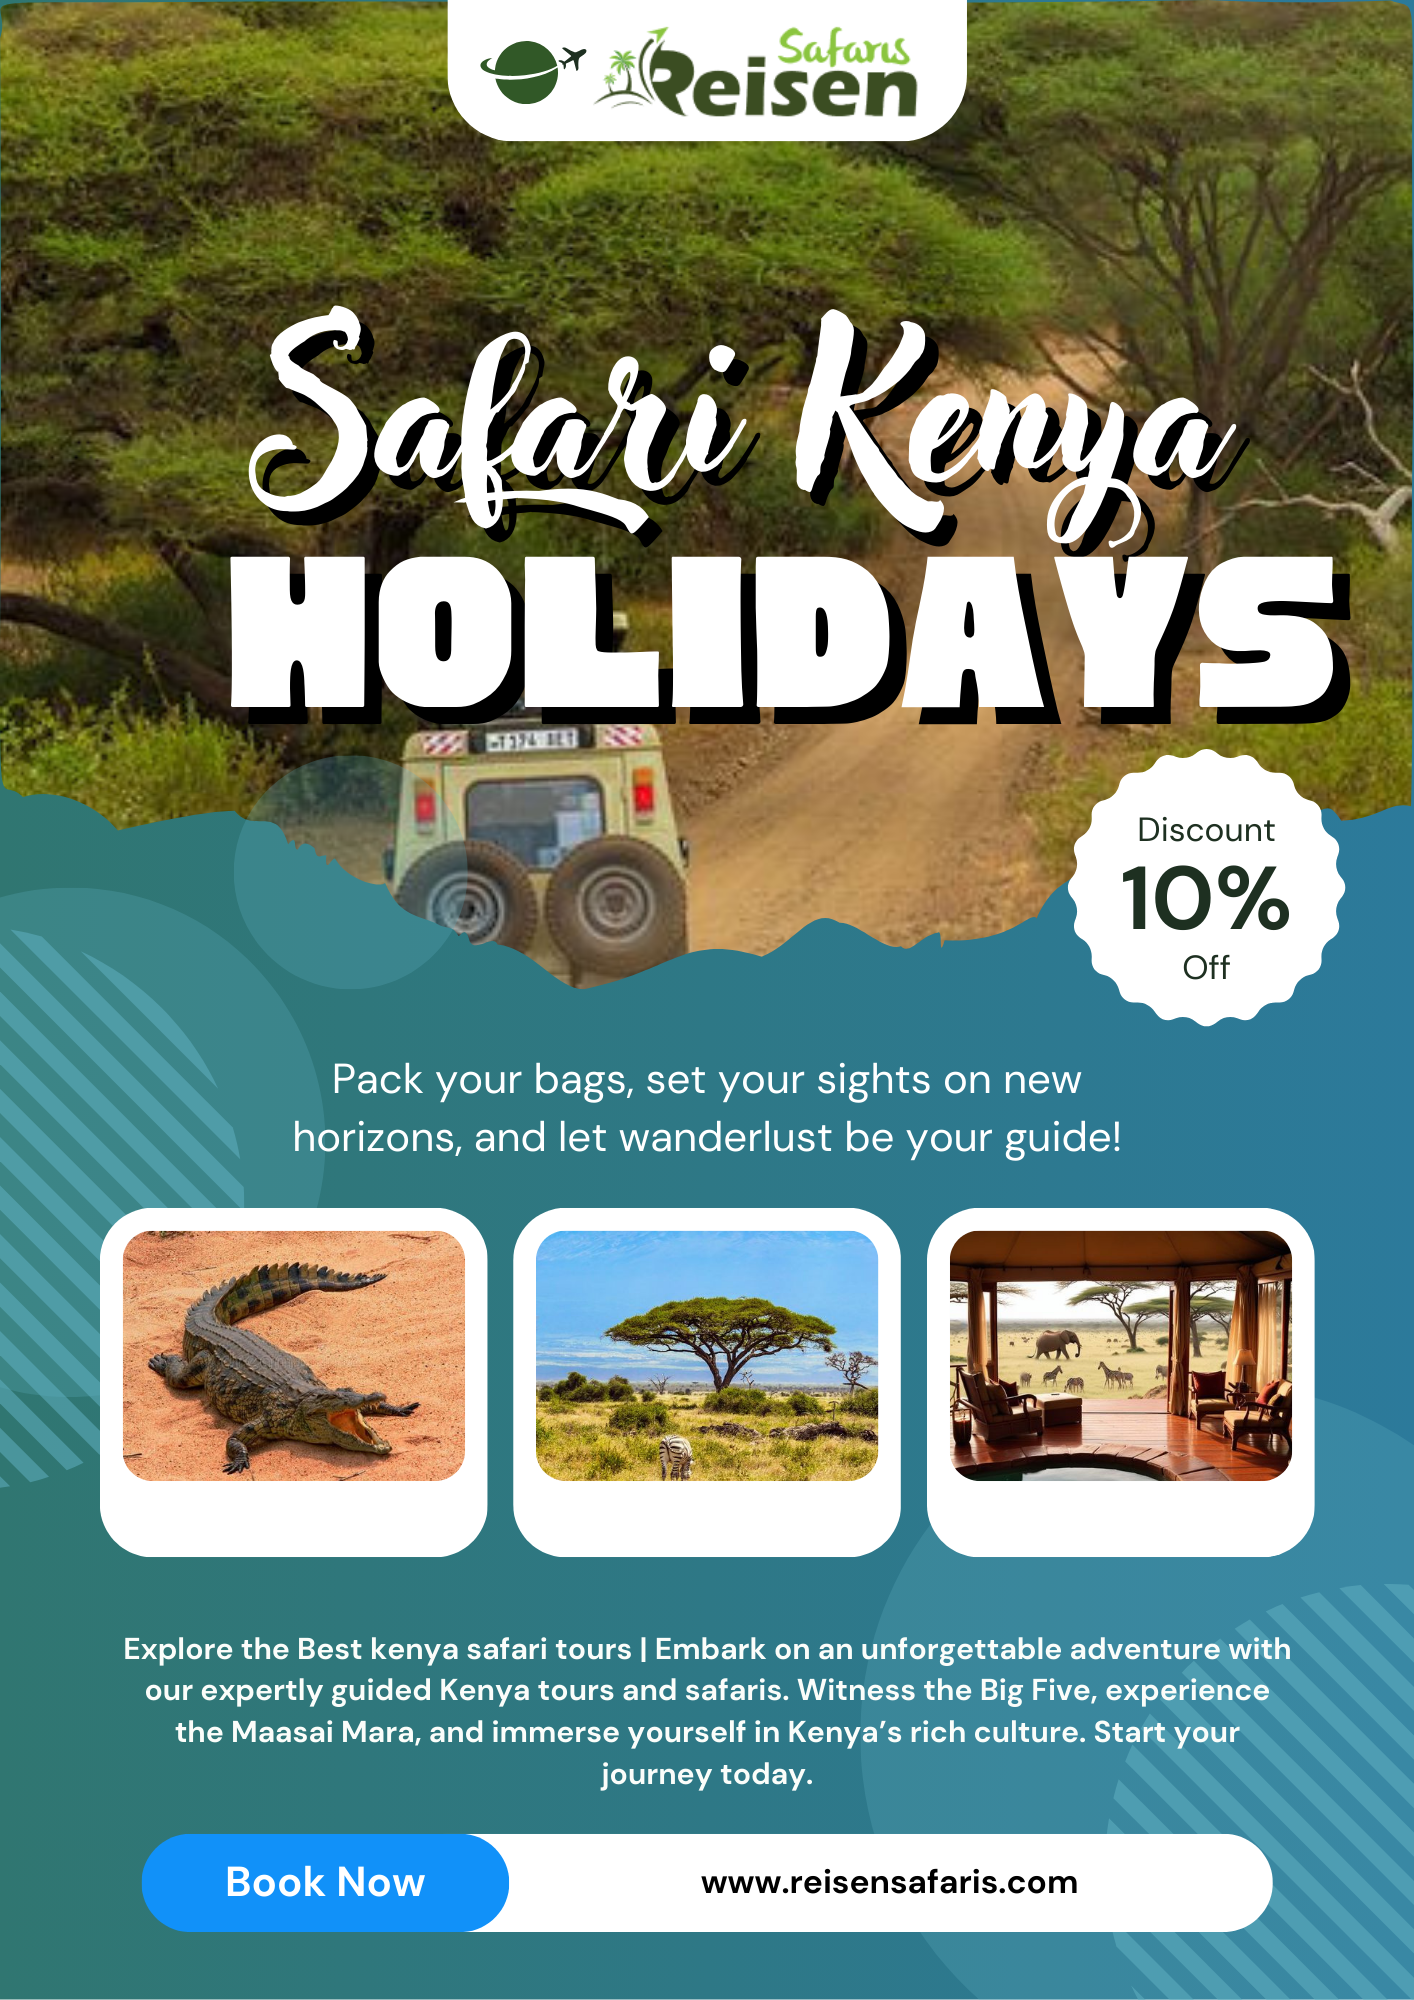  Safari Kenya Holidays